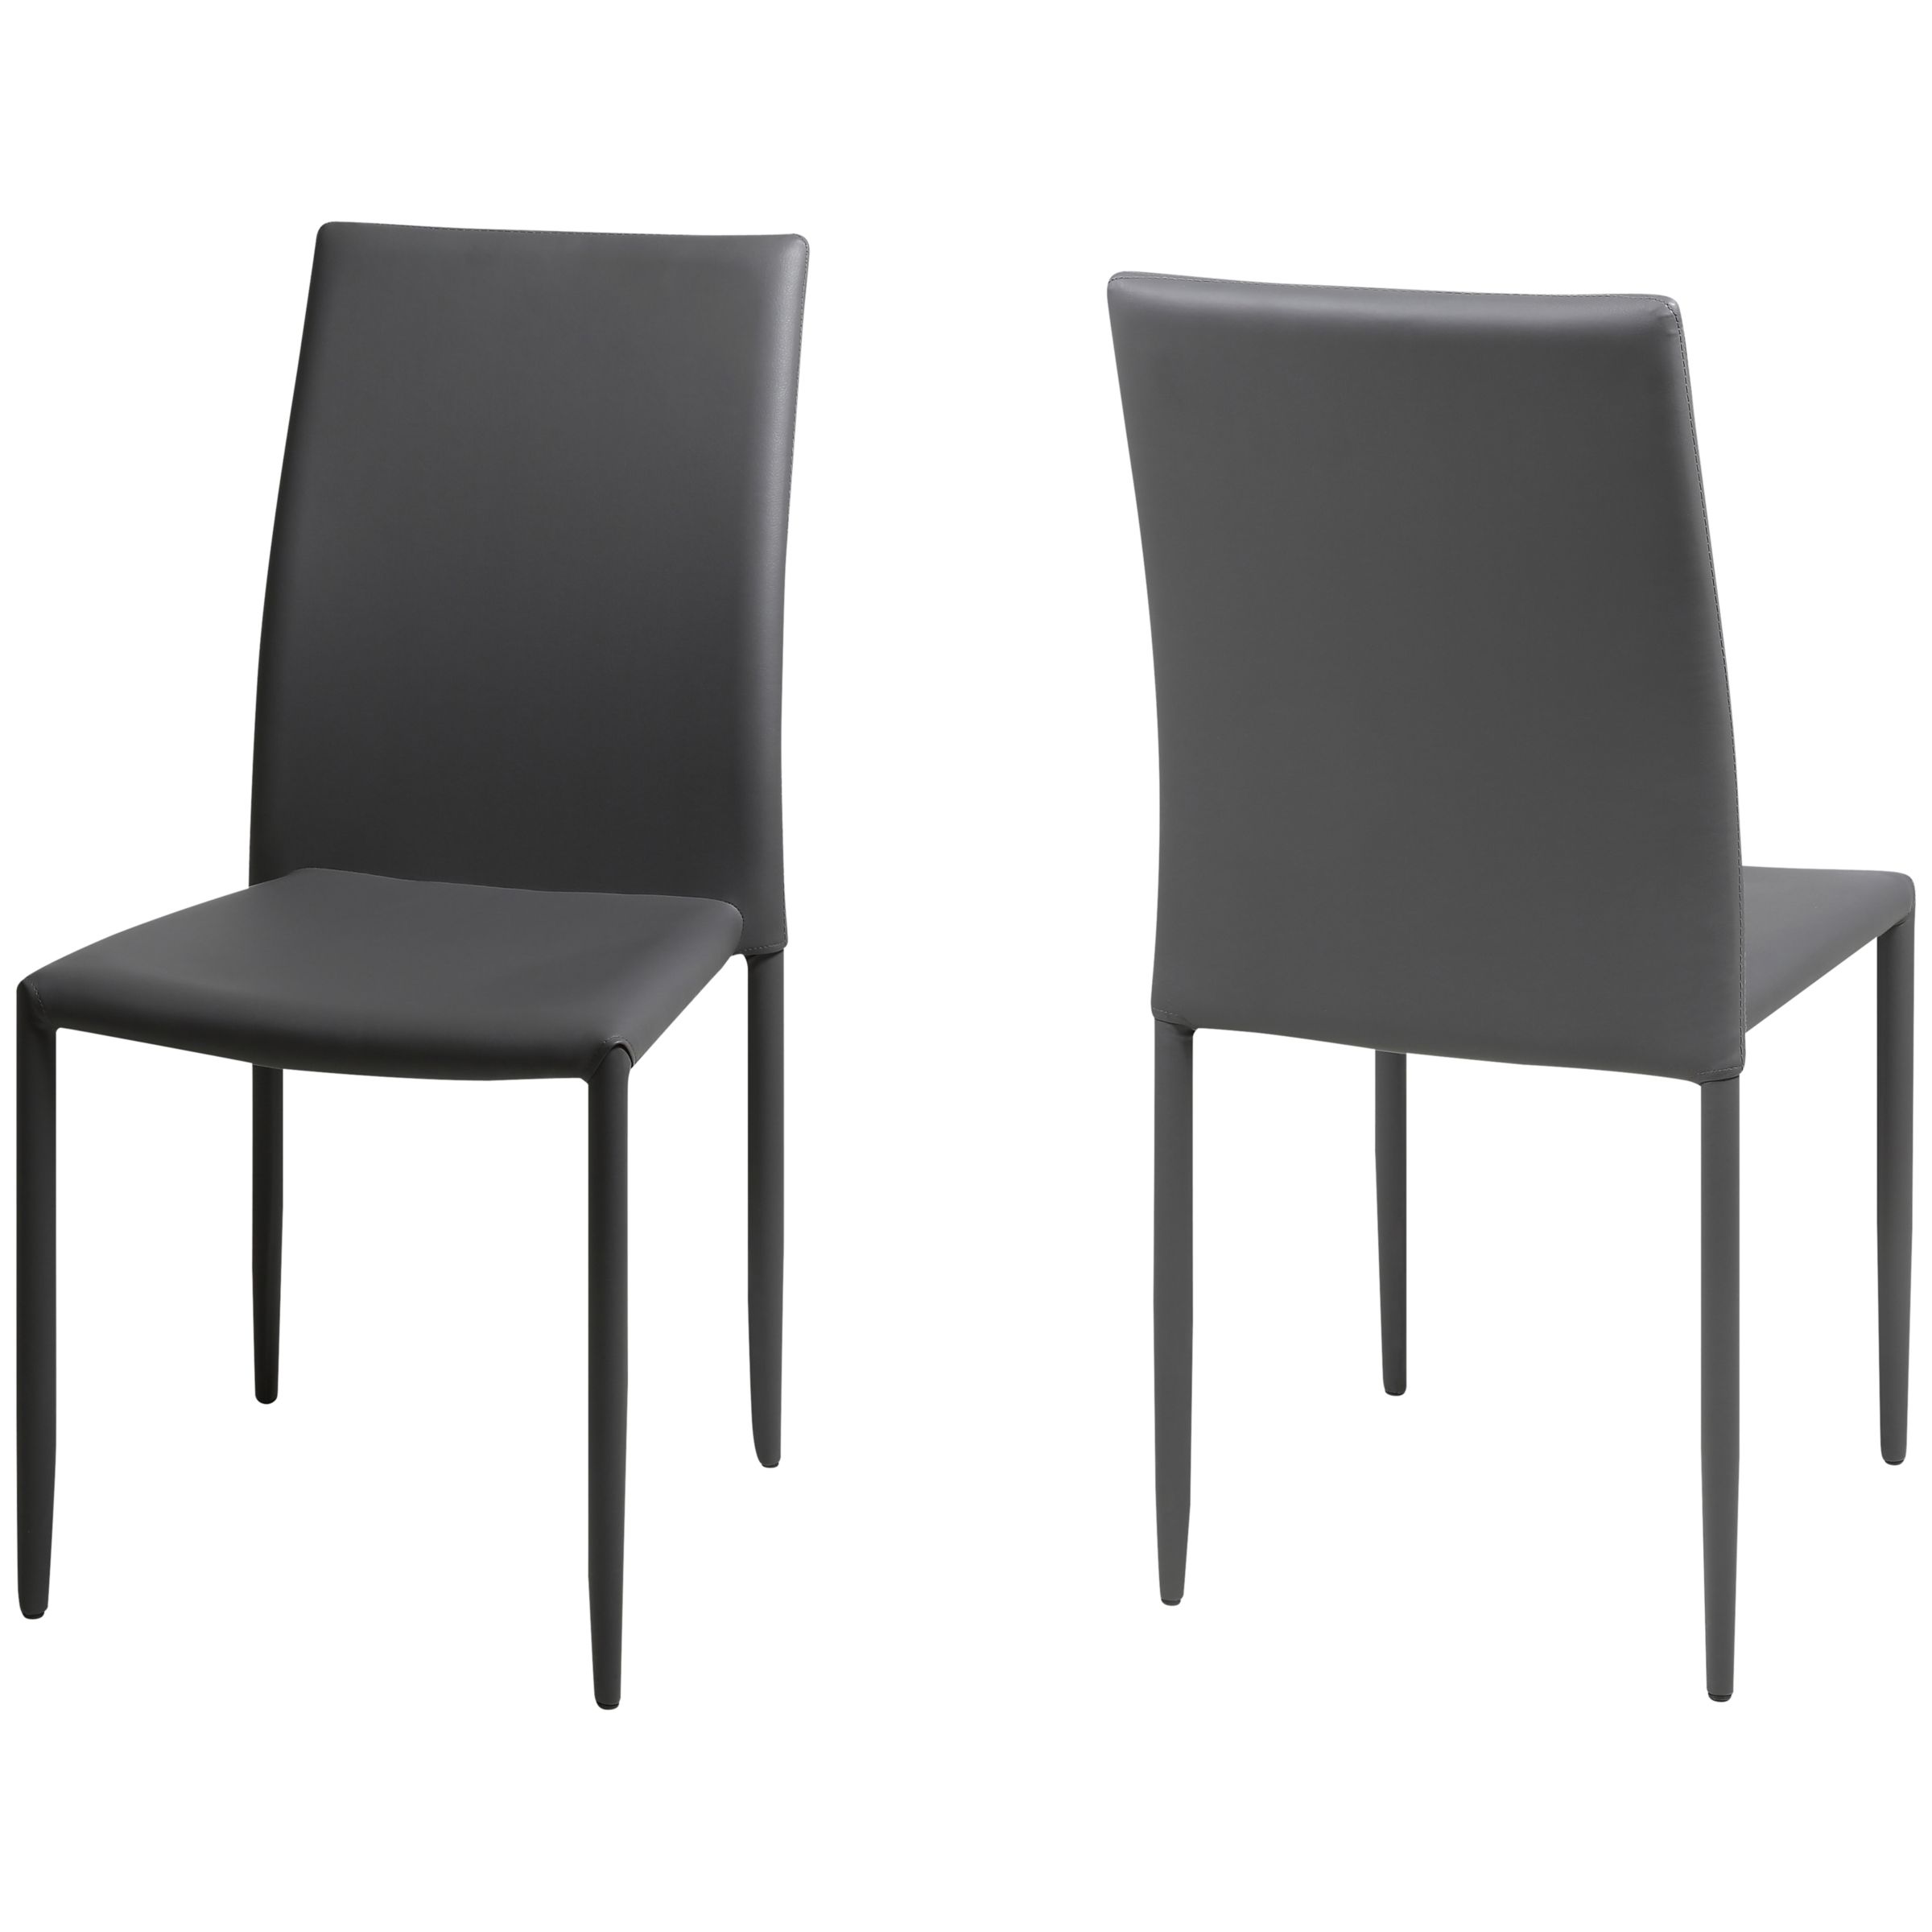 John Lewis & Partners Piana Dining Chairs, Set of 2, Grey